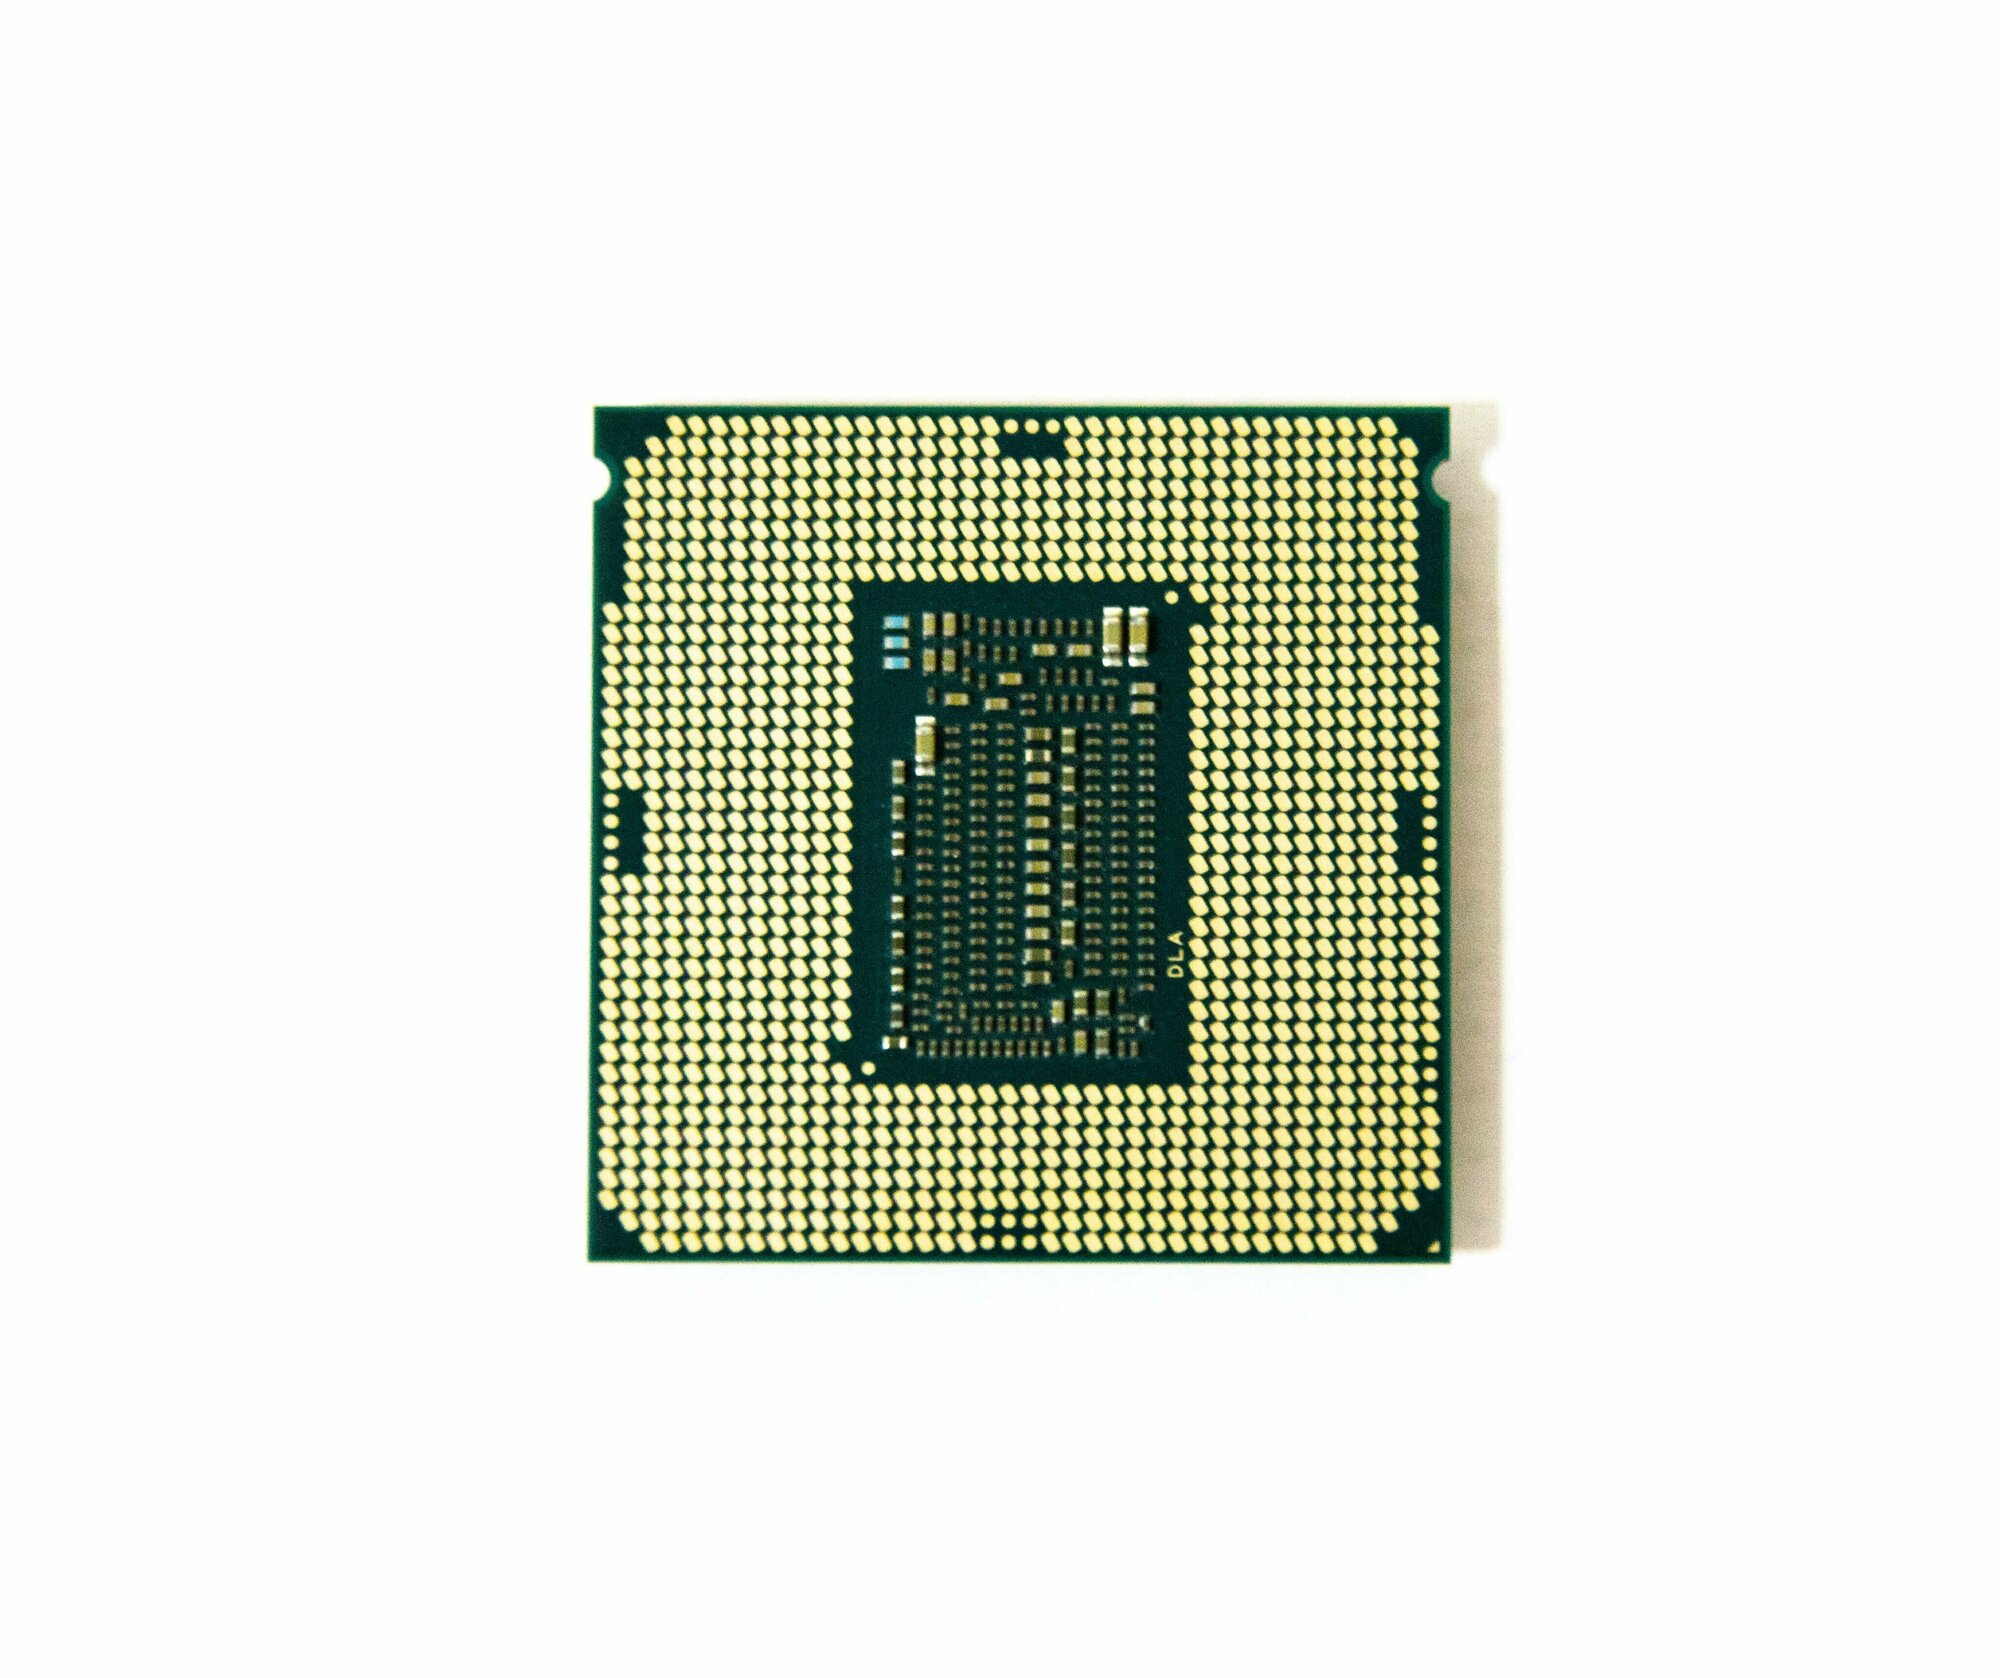 Процессор Intel Core i7 9700KF LGA1151-v2